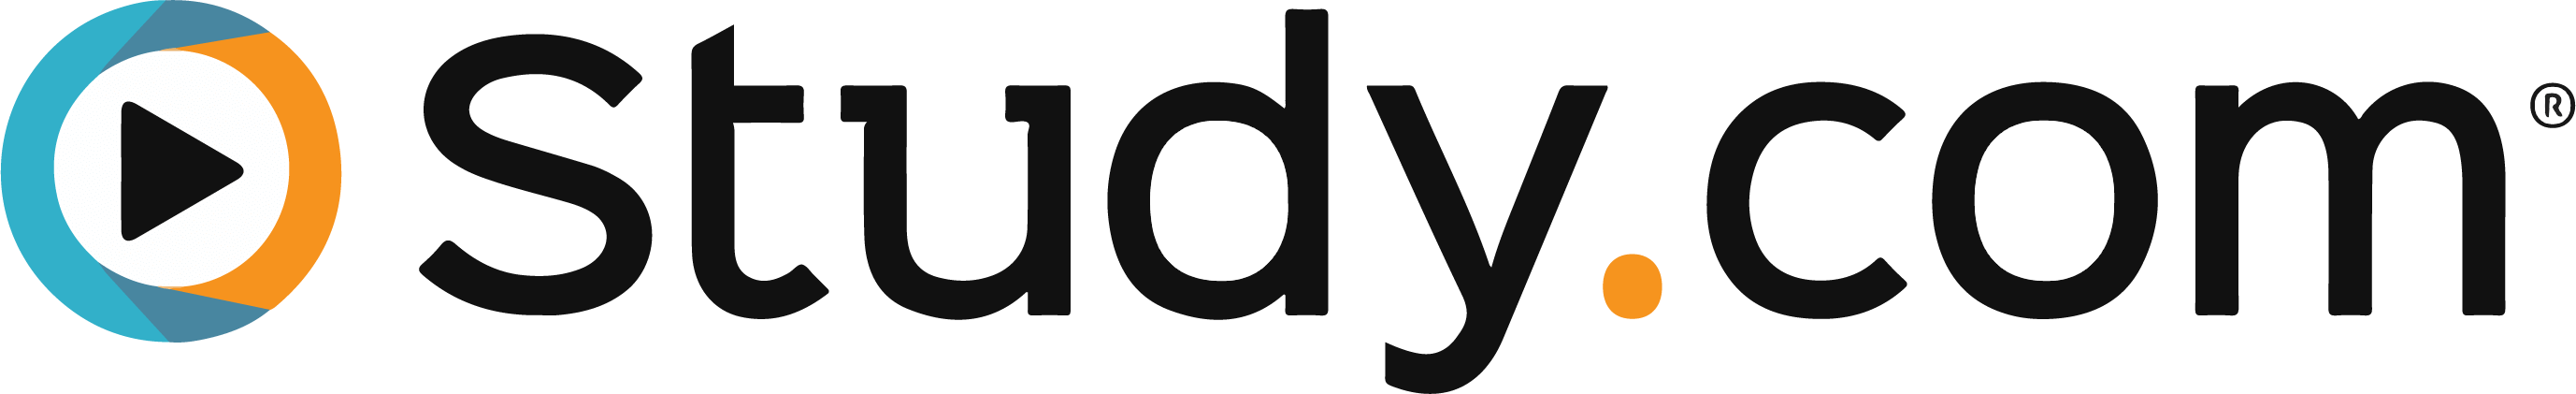 study-logo.png